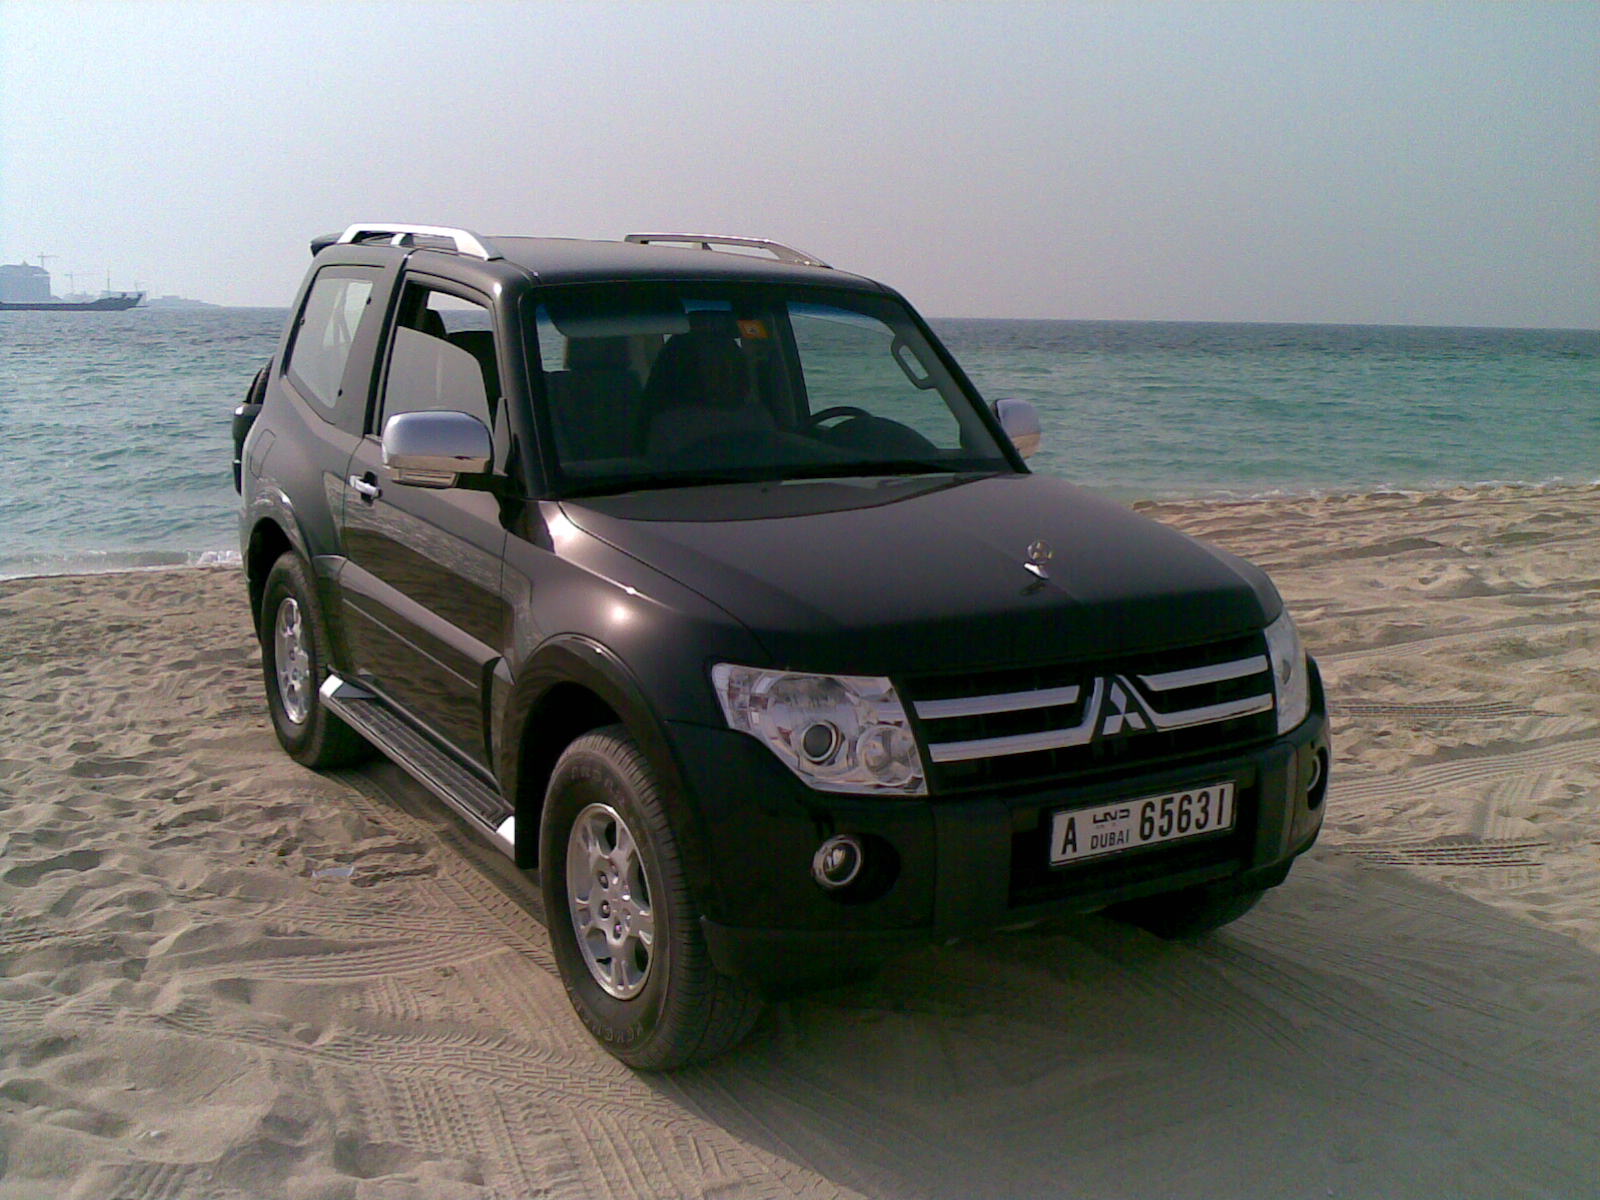 2007 Mitsubishi Pajero Pictures CarGurus